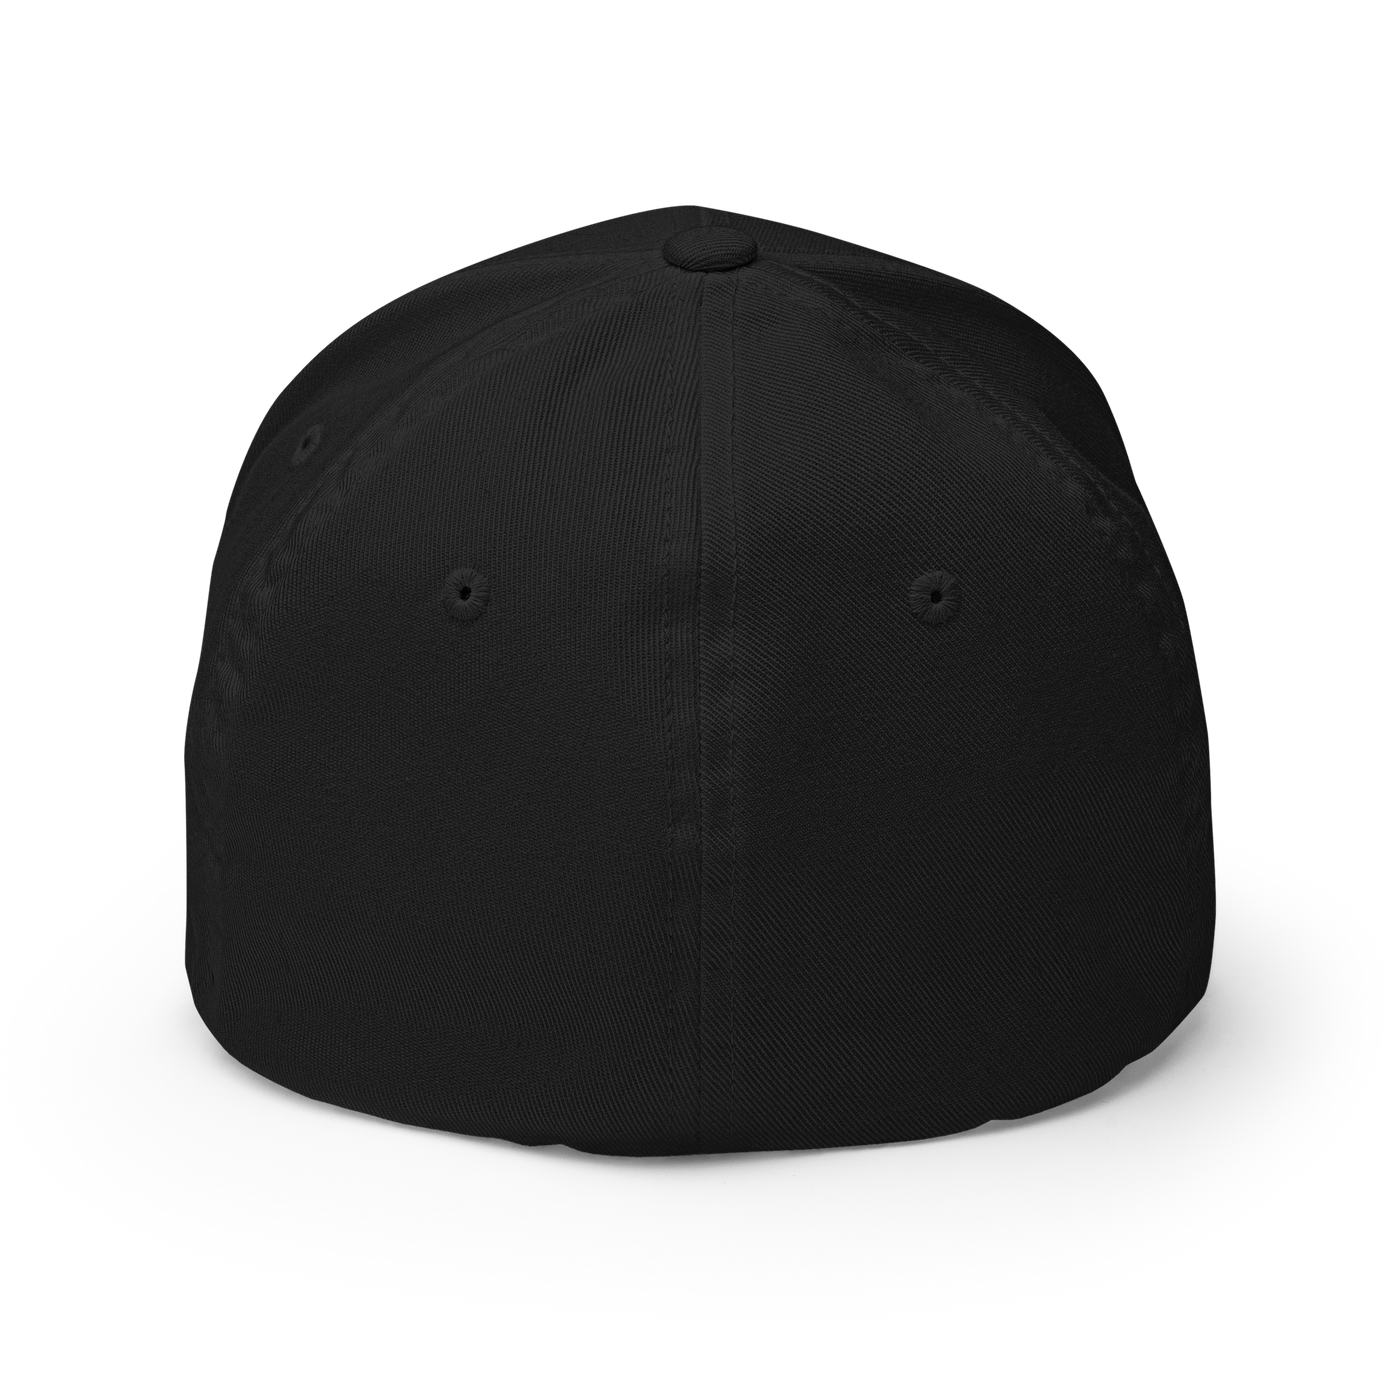 Future Milf Flexfit Cap - Black - S/M - Just Another Cap Store